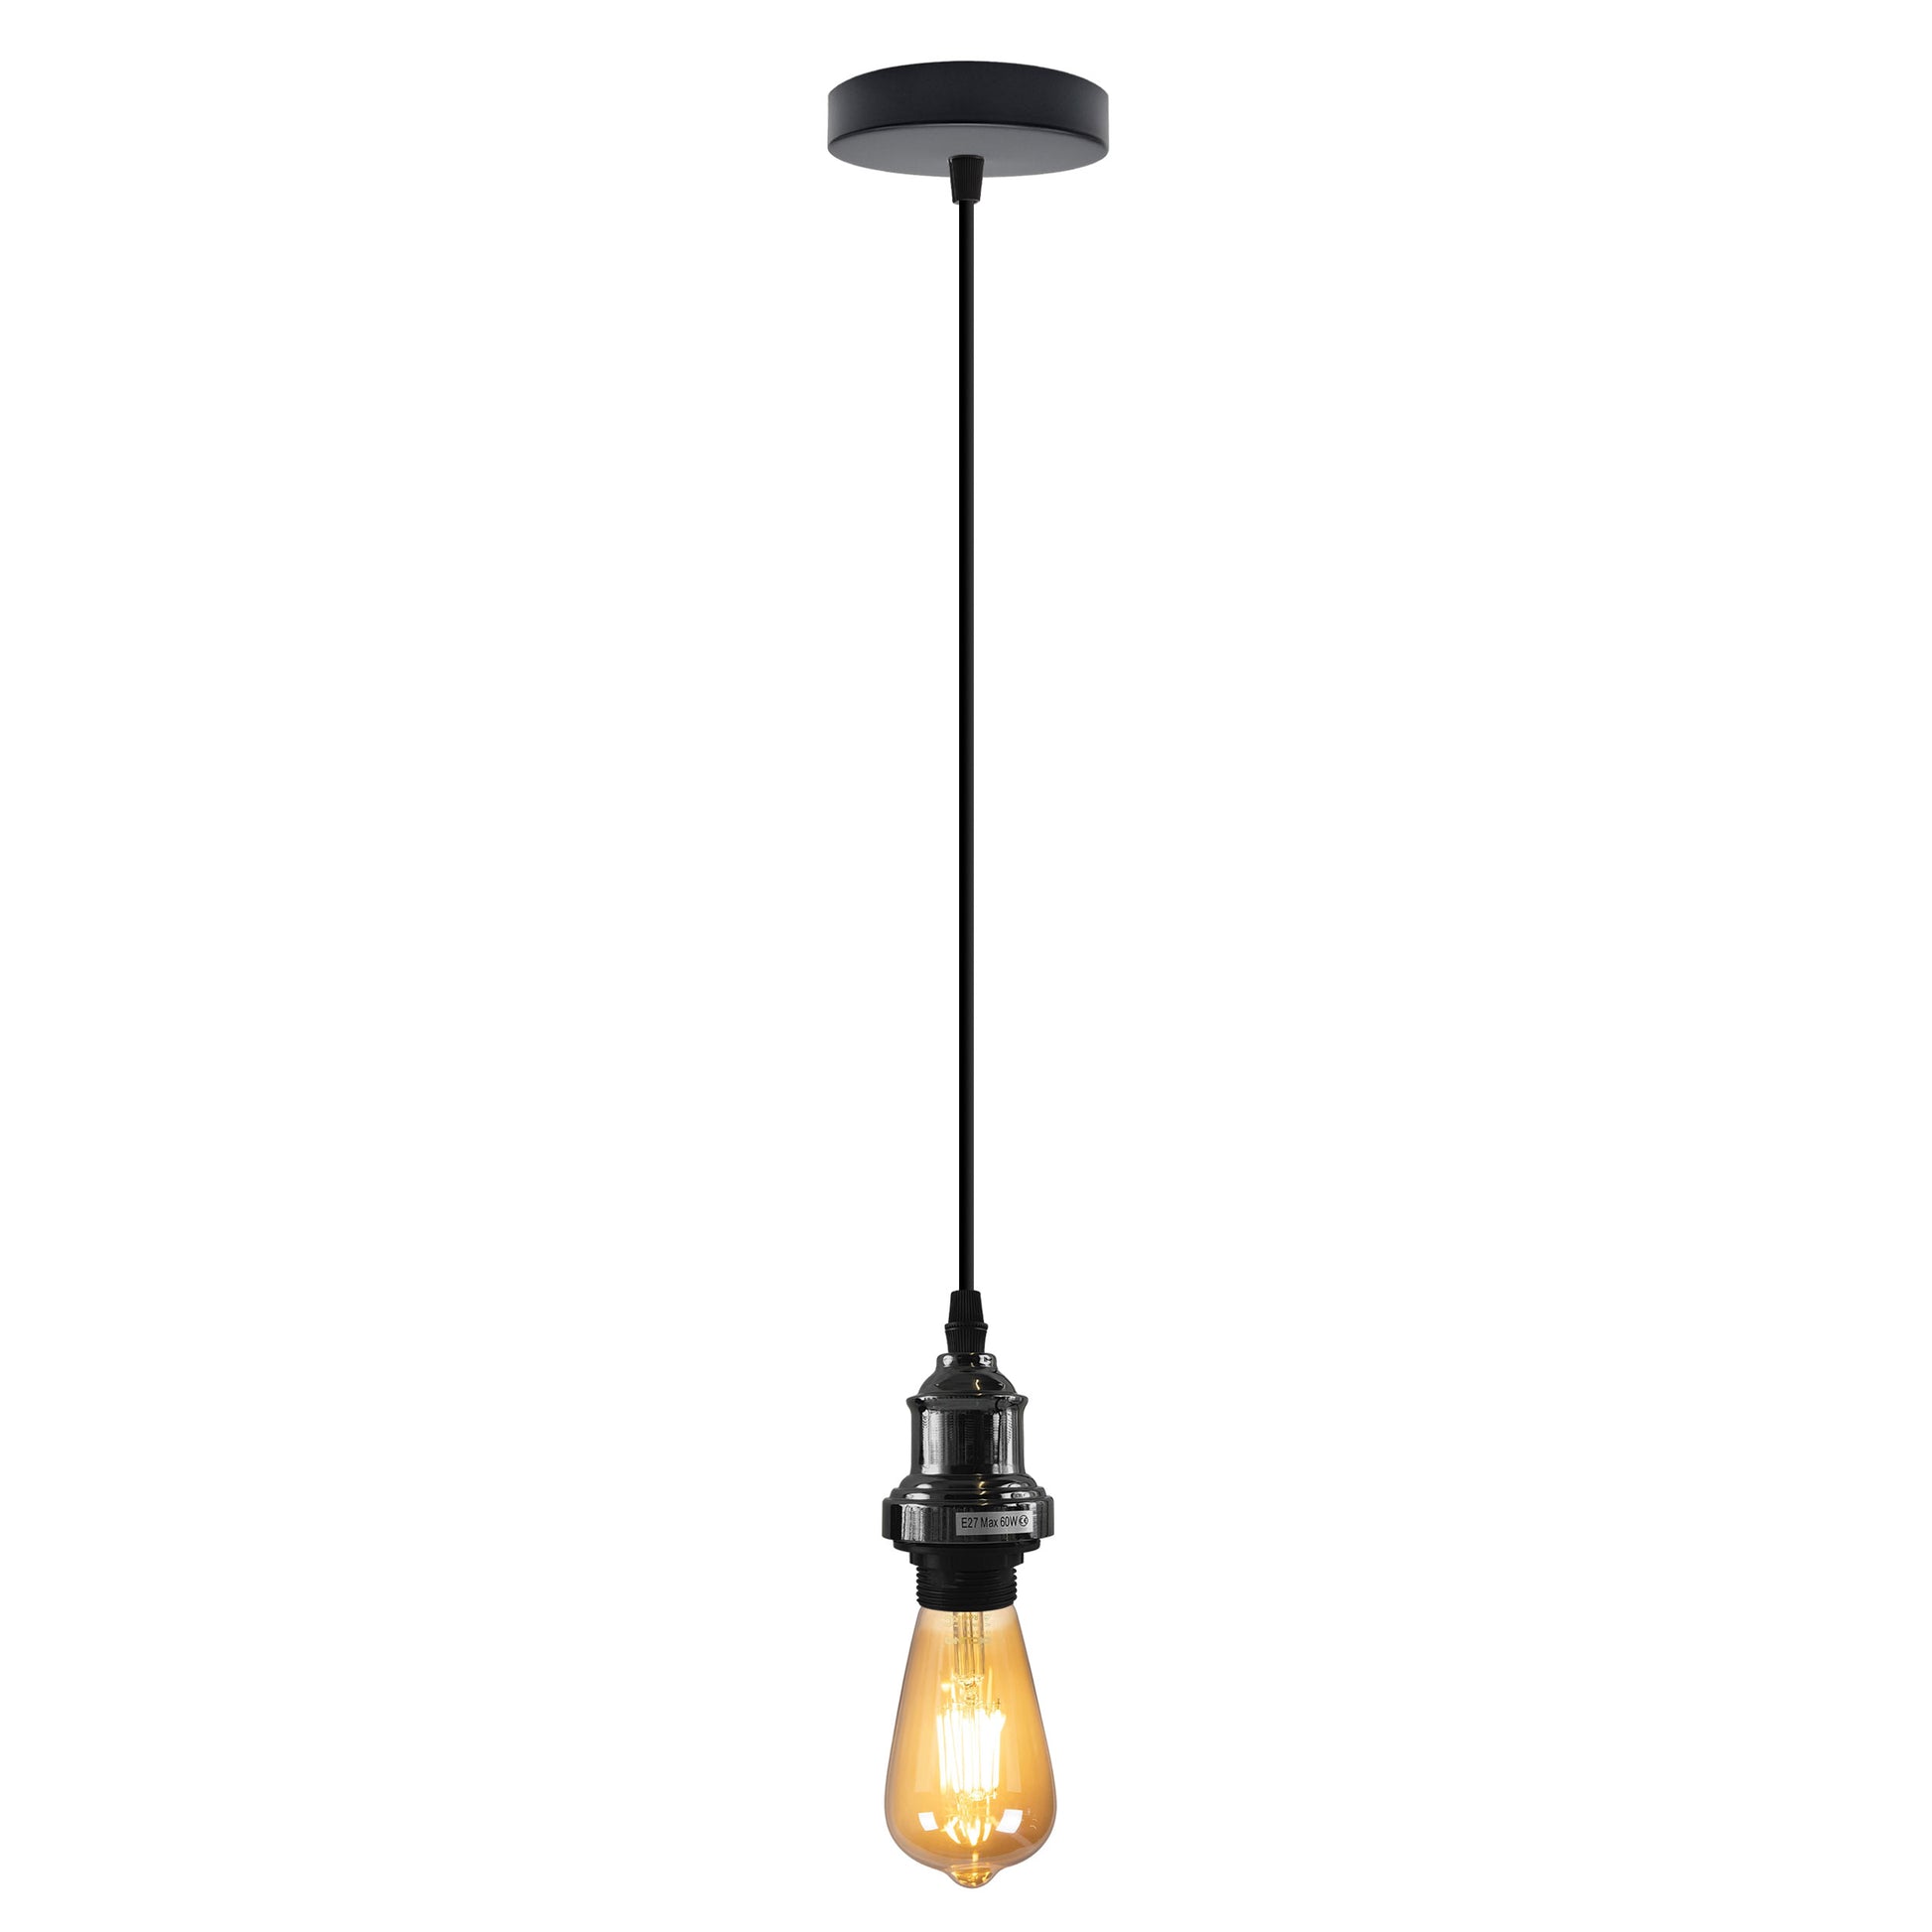 Hanging Black Ceiling Pendant Lighting with 95cm Adjustable Cord E27 Base UK~4455